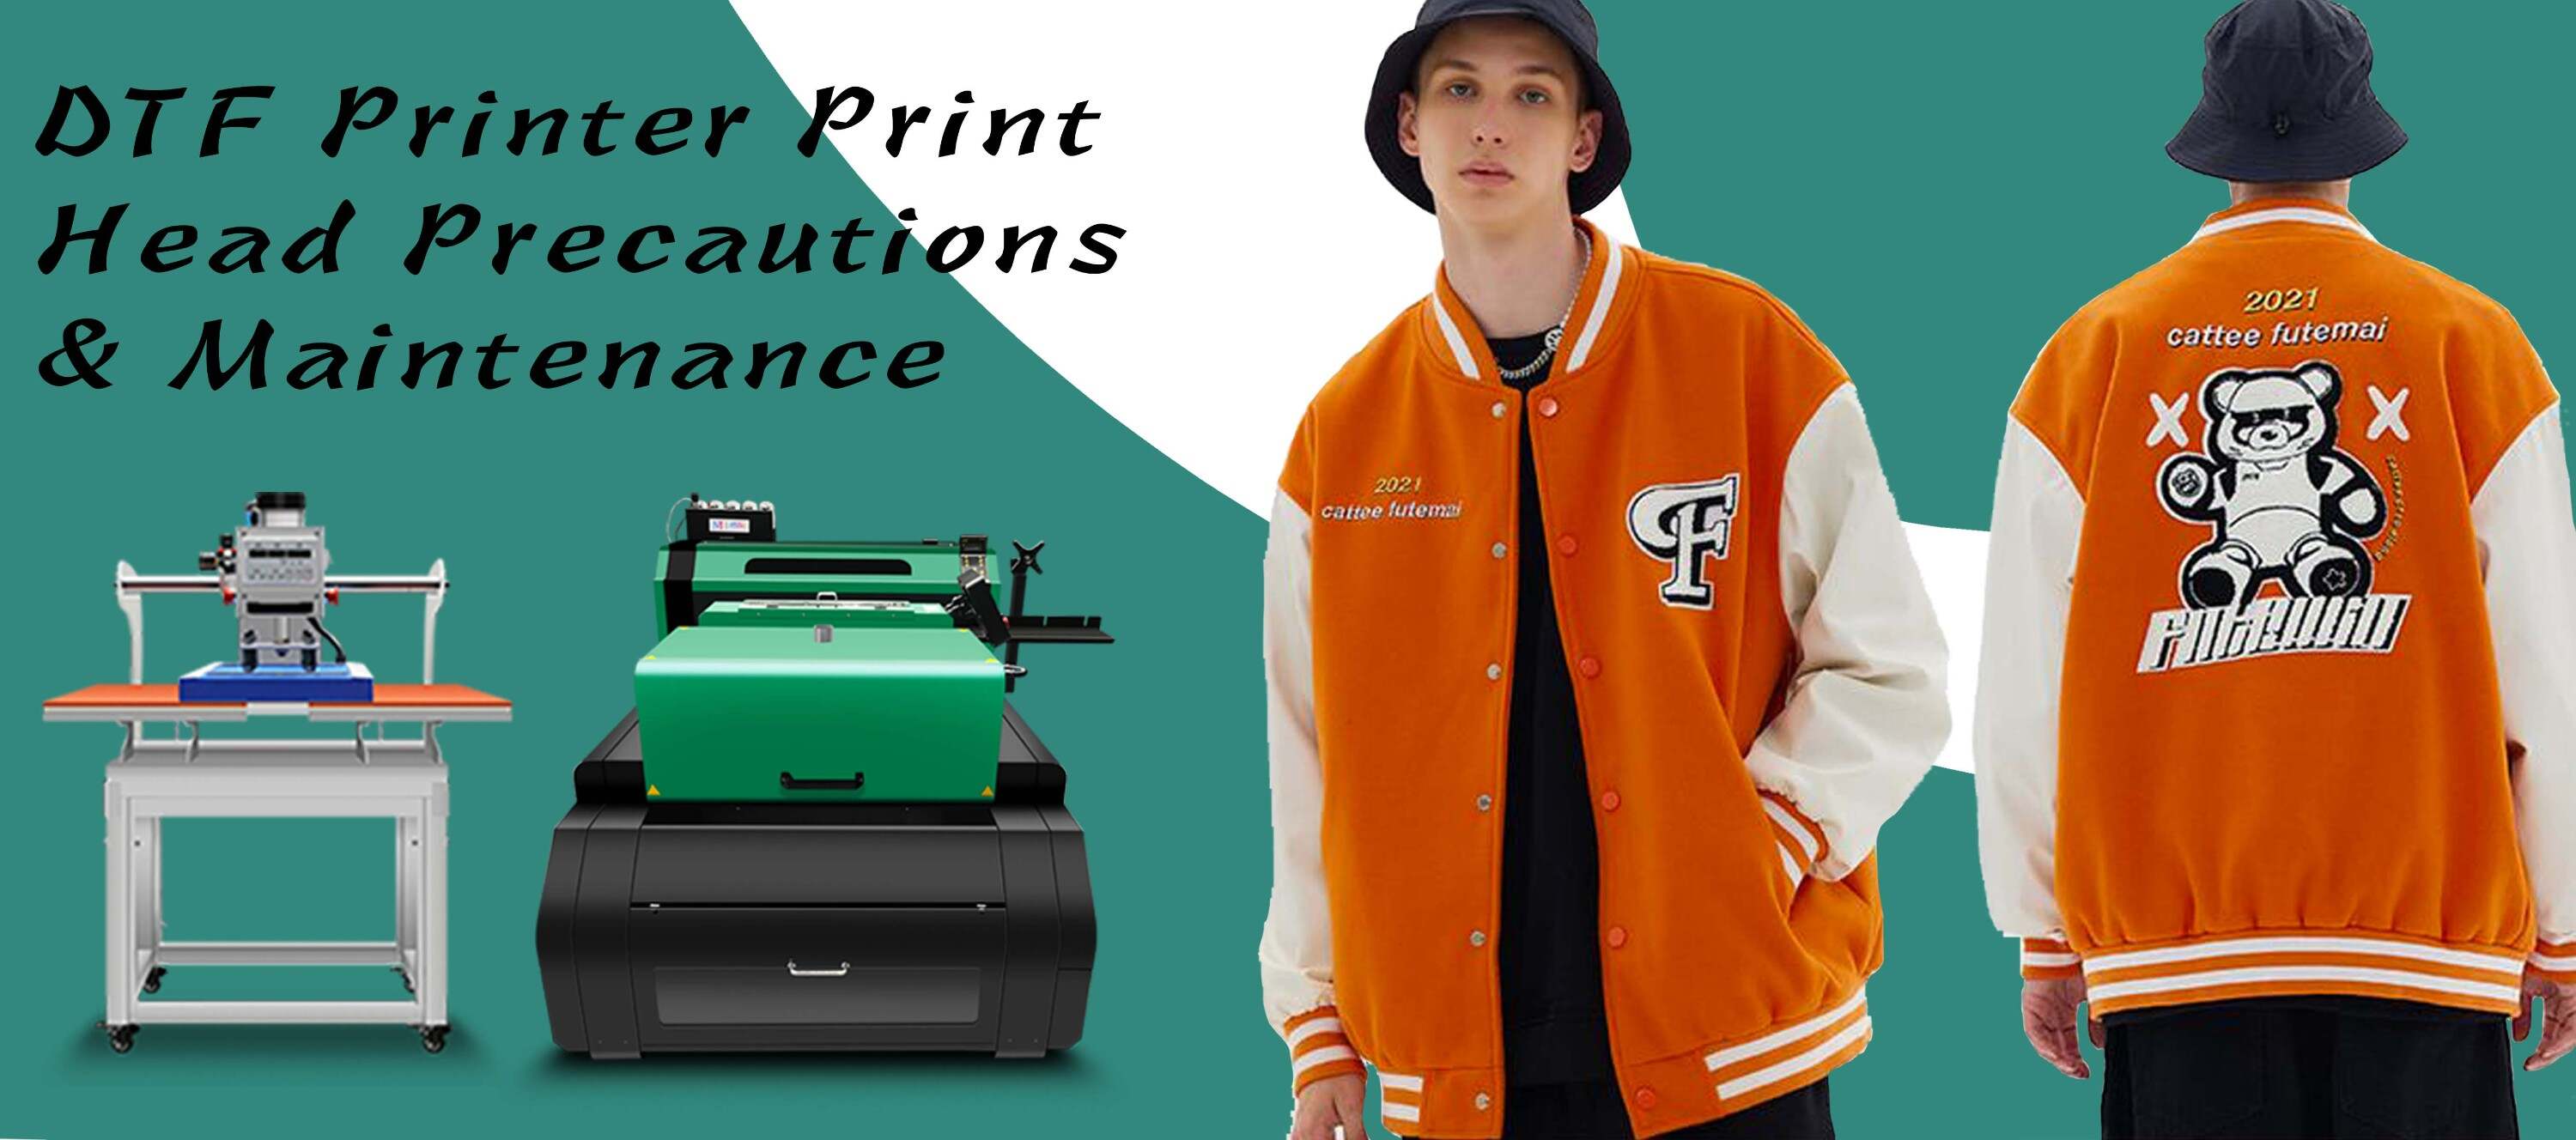 DTF Printer Print Head Precautions & Maintenance